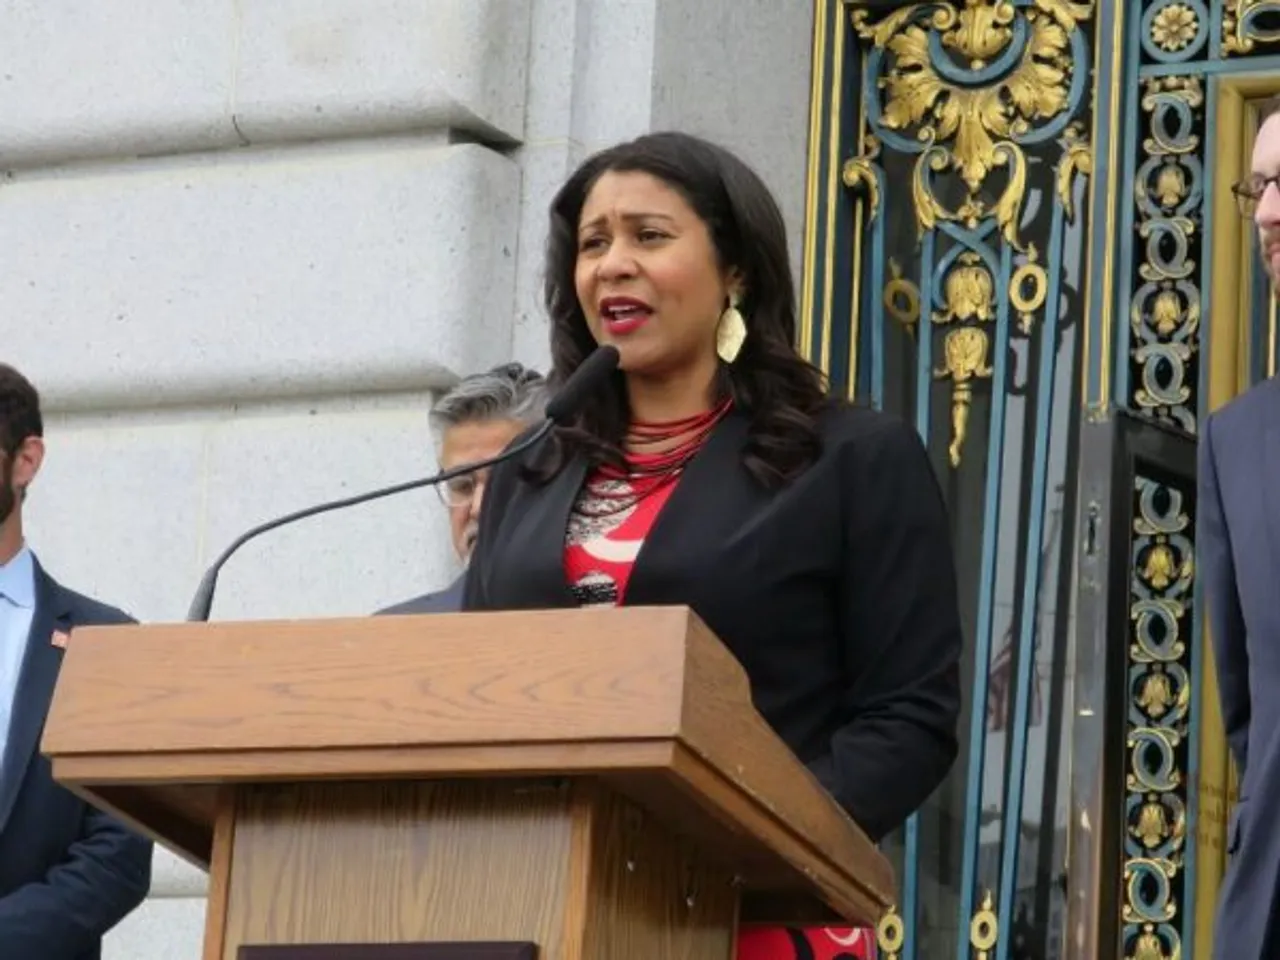 London Breed Is San Francisco's First Black Woman Mayor